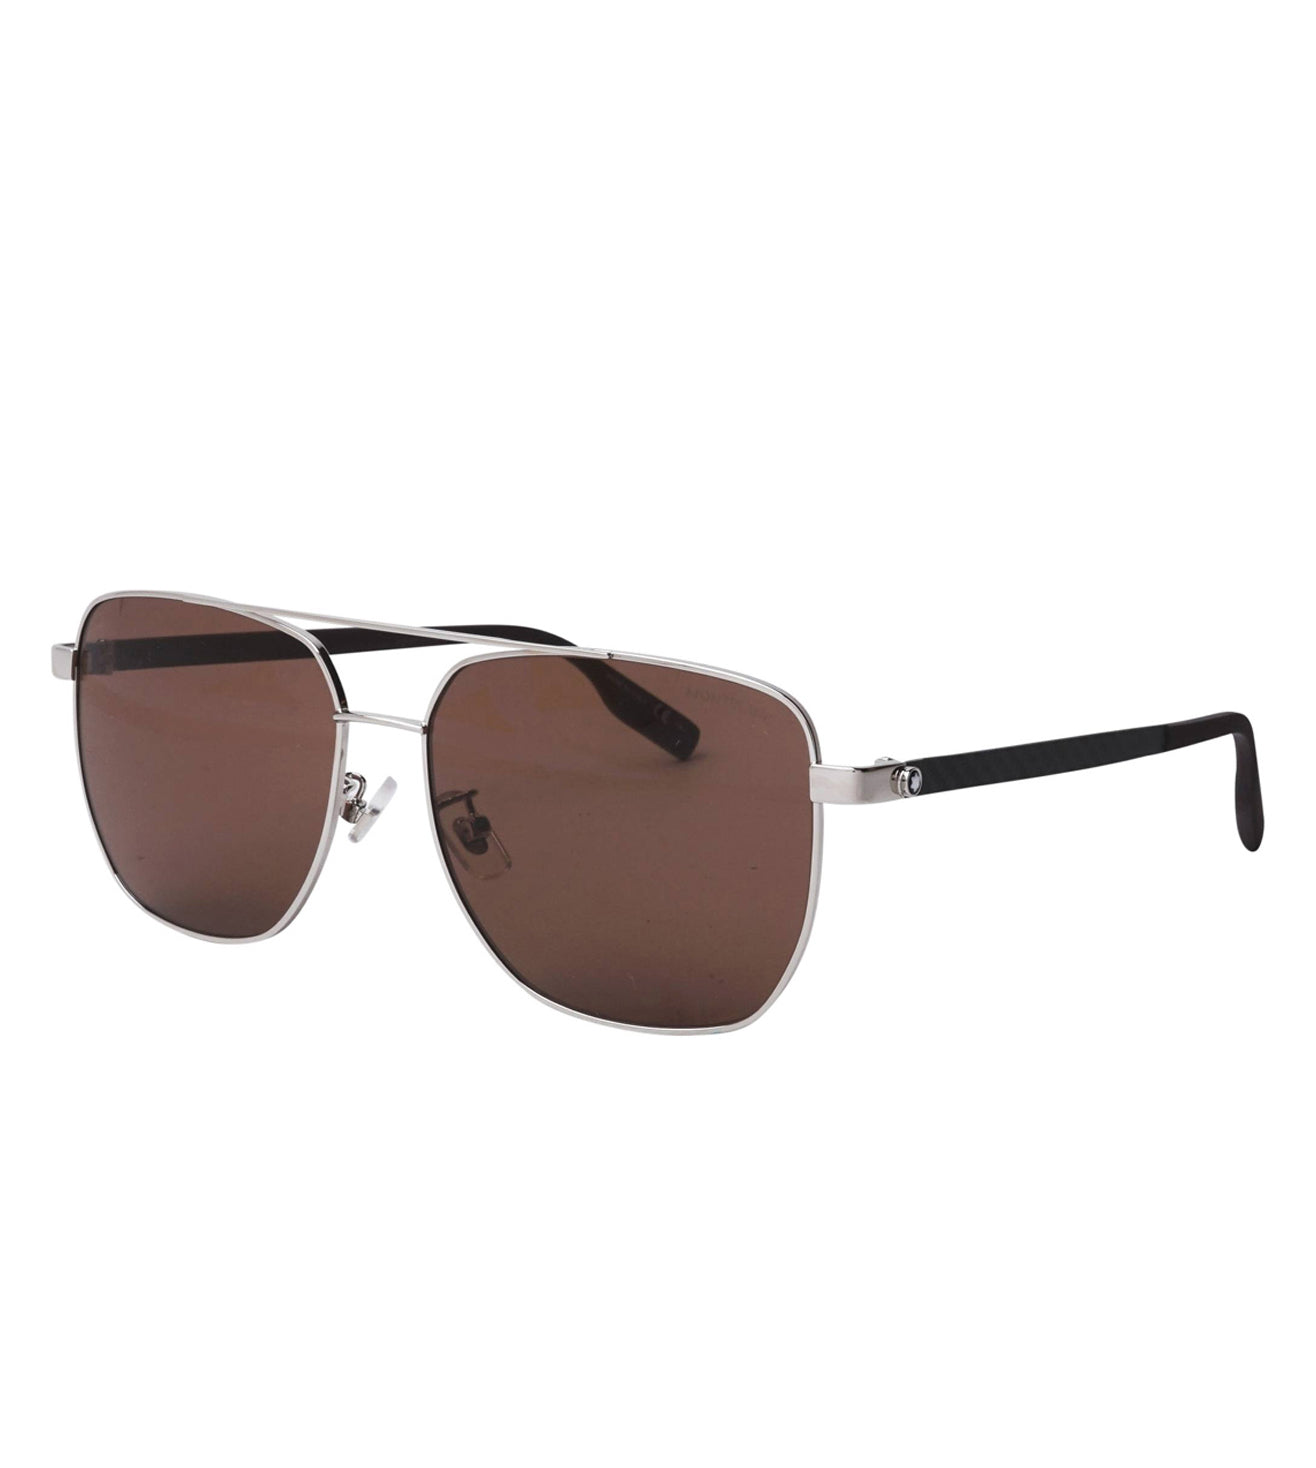 Montblanc Men's Brown Aviator Sunglasses